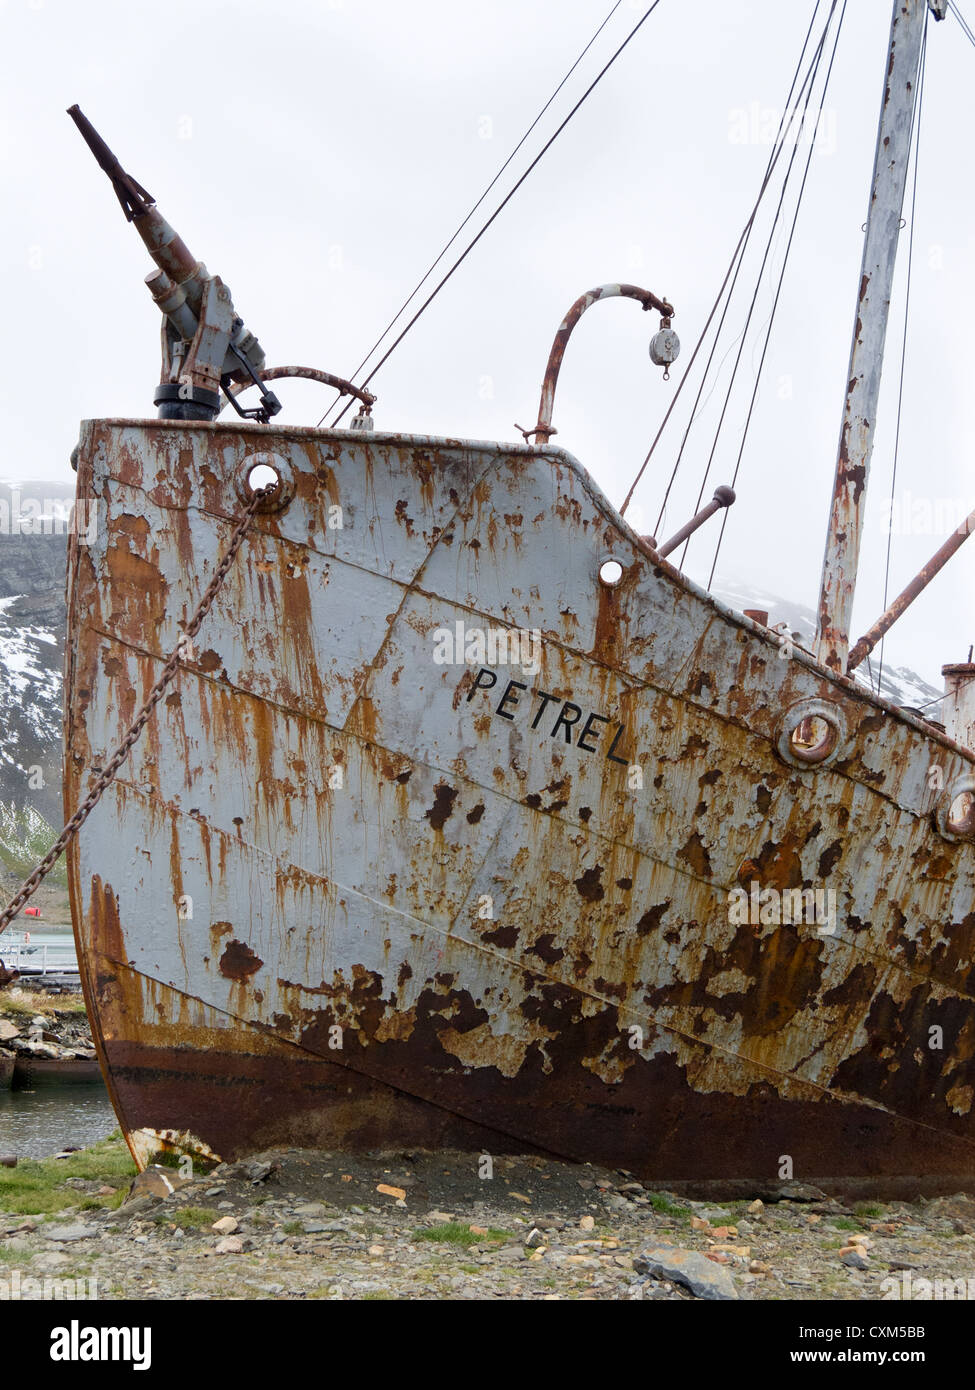 A derelict whaling ship, the Petrel, in Grytviken, South Georgia Island. Stock Photo